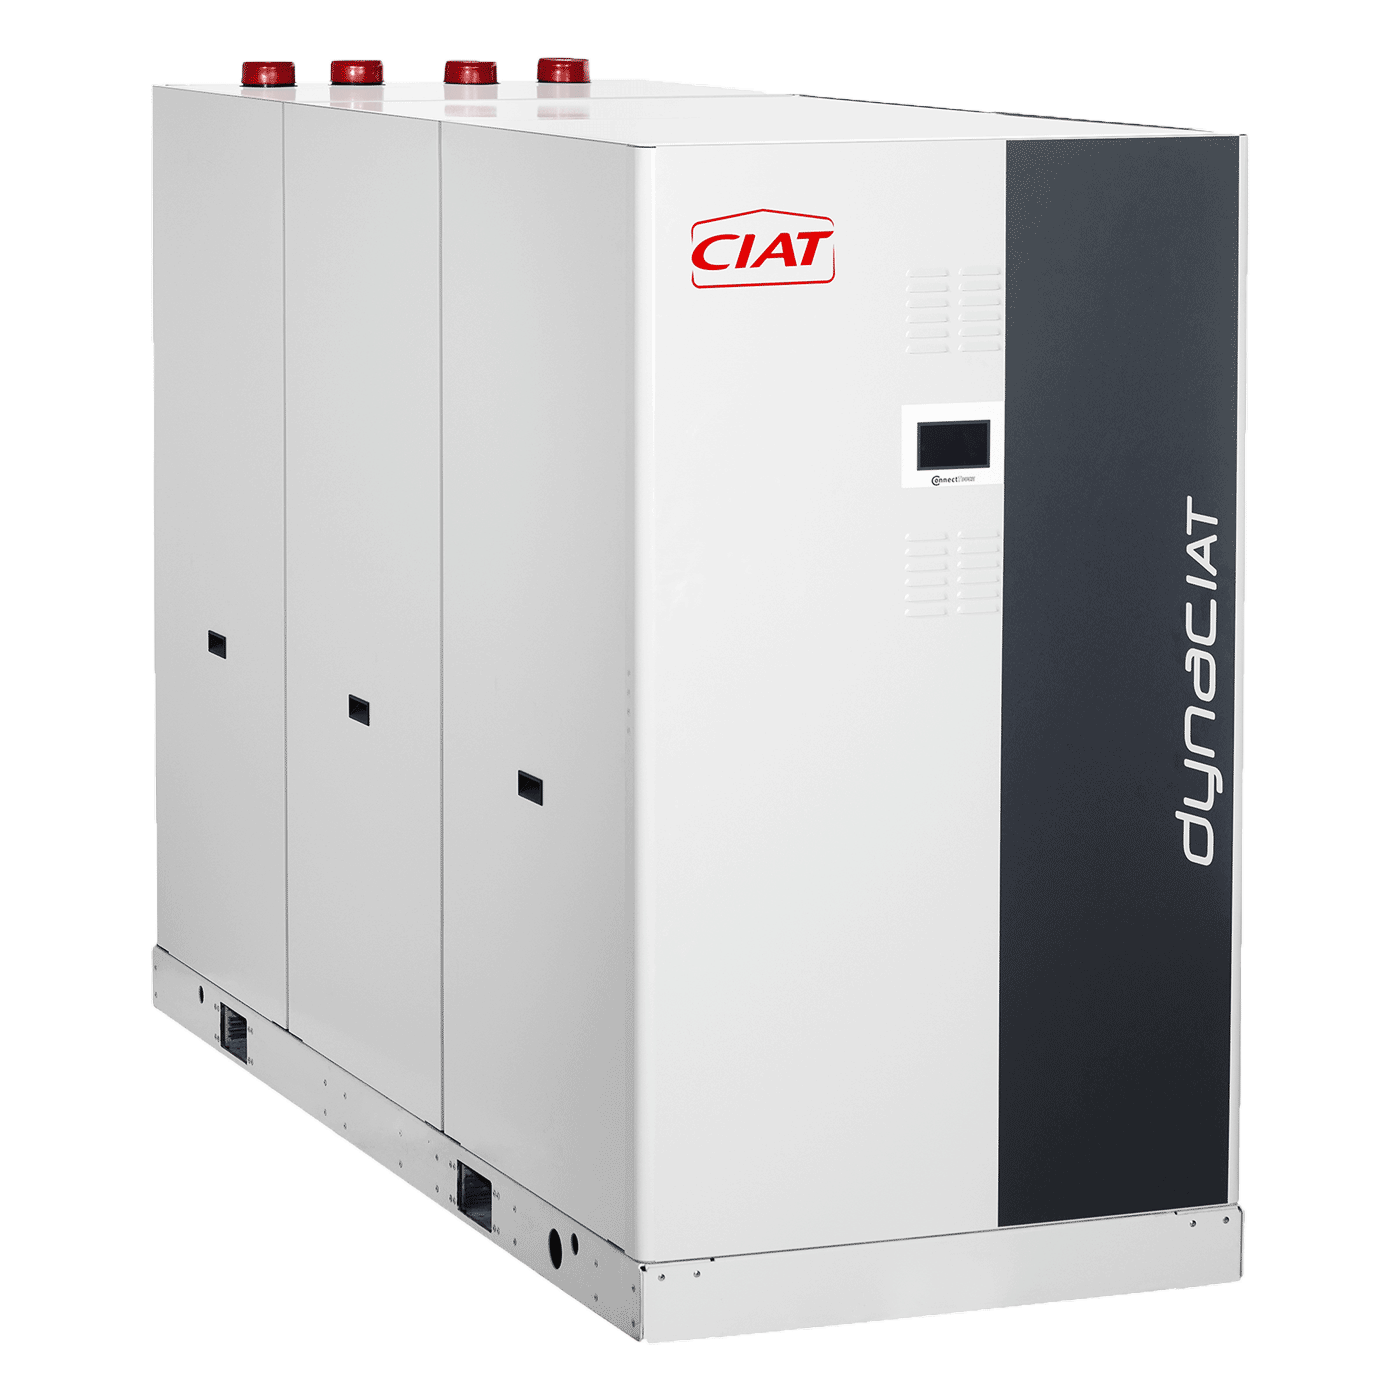 ciat-dynaciat-lg-heat-pump-air-cooled-water-chiller-3